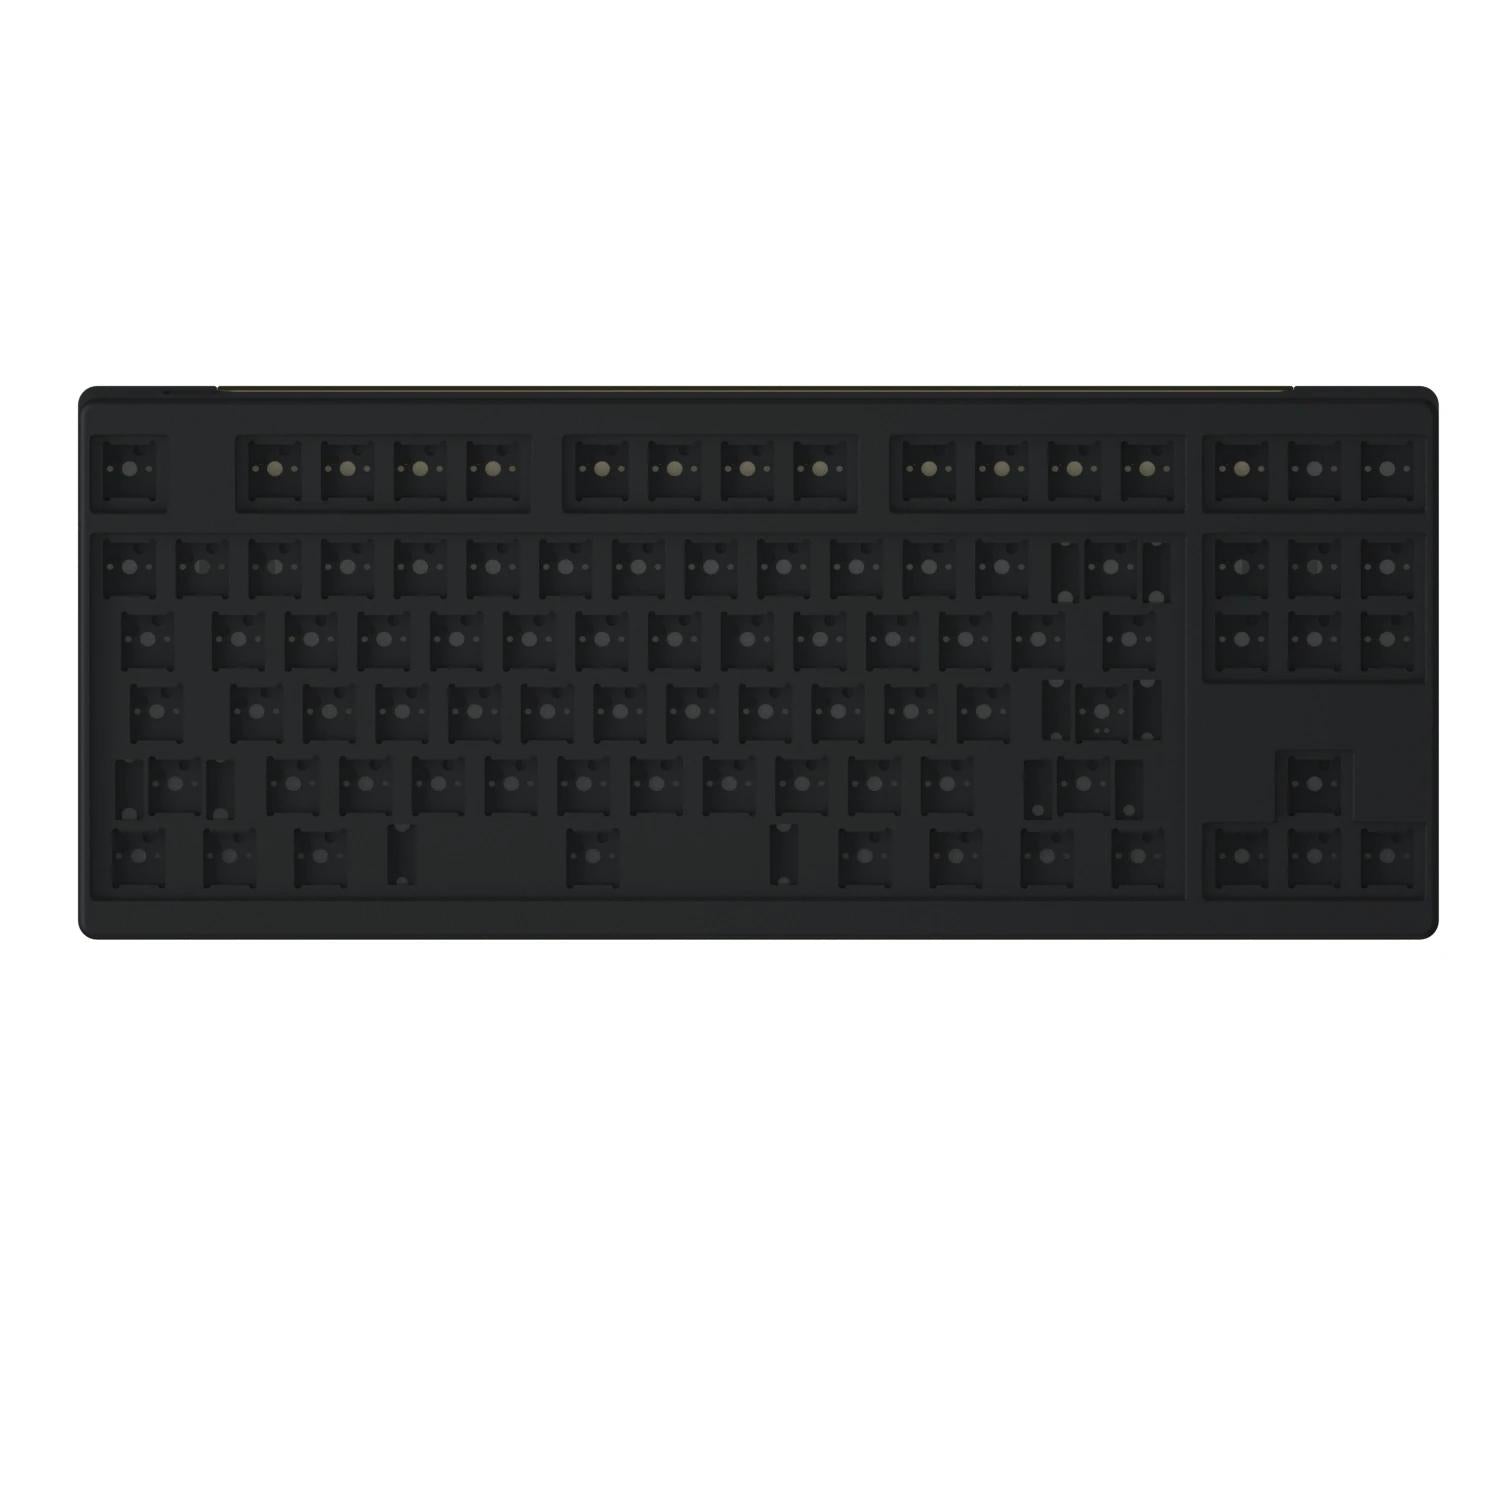 ID87v2 TKL Keyboard Kit